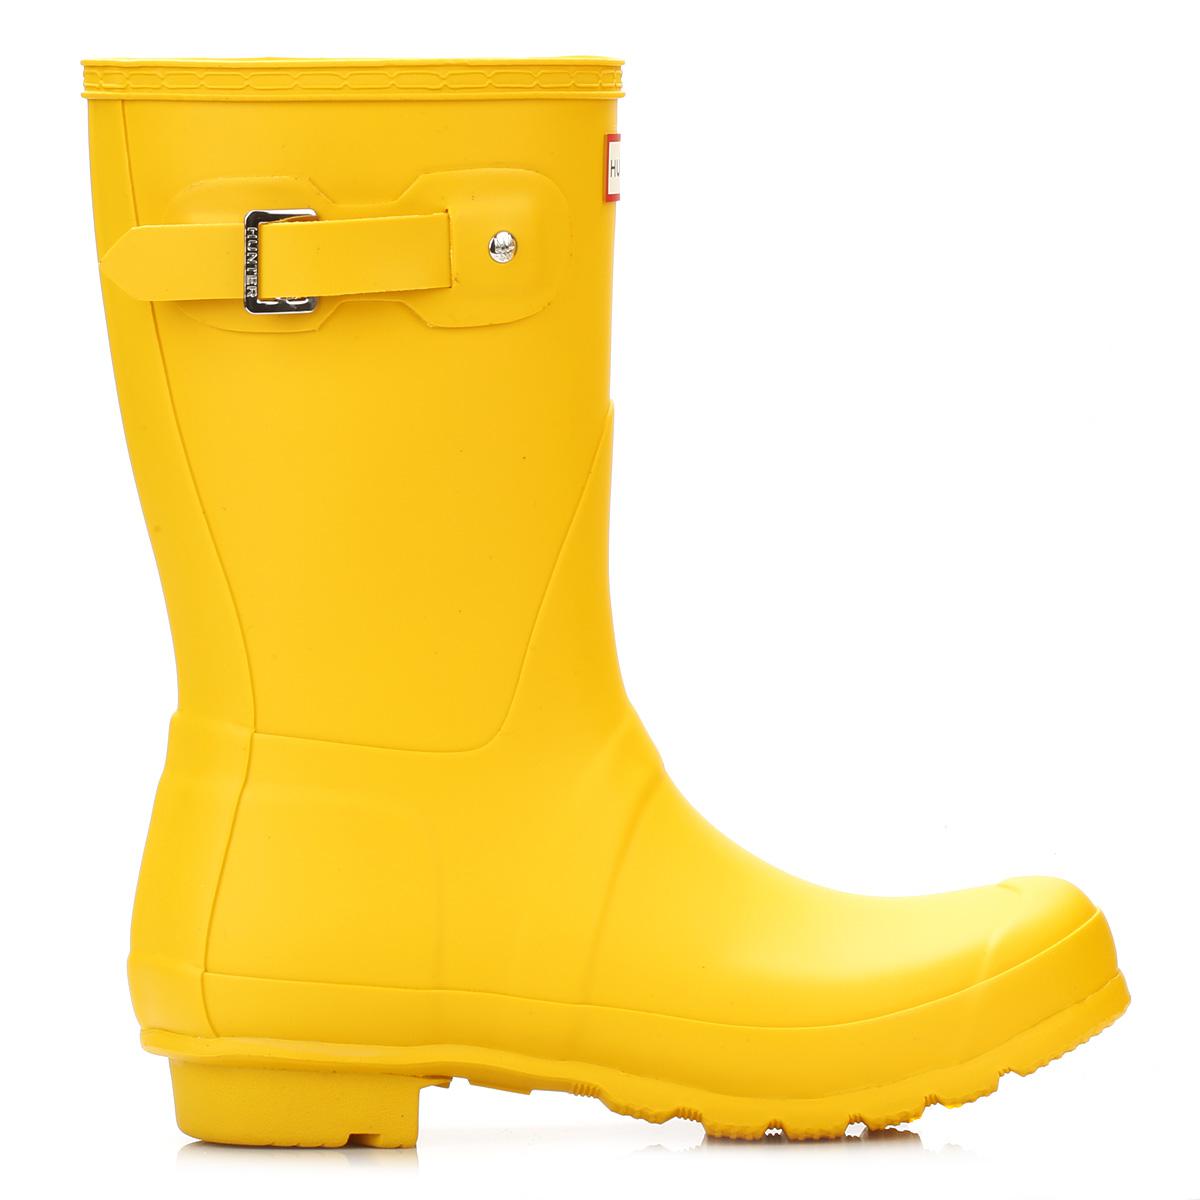 HUNTER Original Short Mid-calf Rubber Rain Boot - 6m in Yellow - Lyst